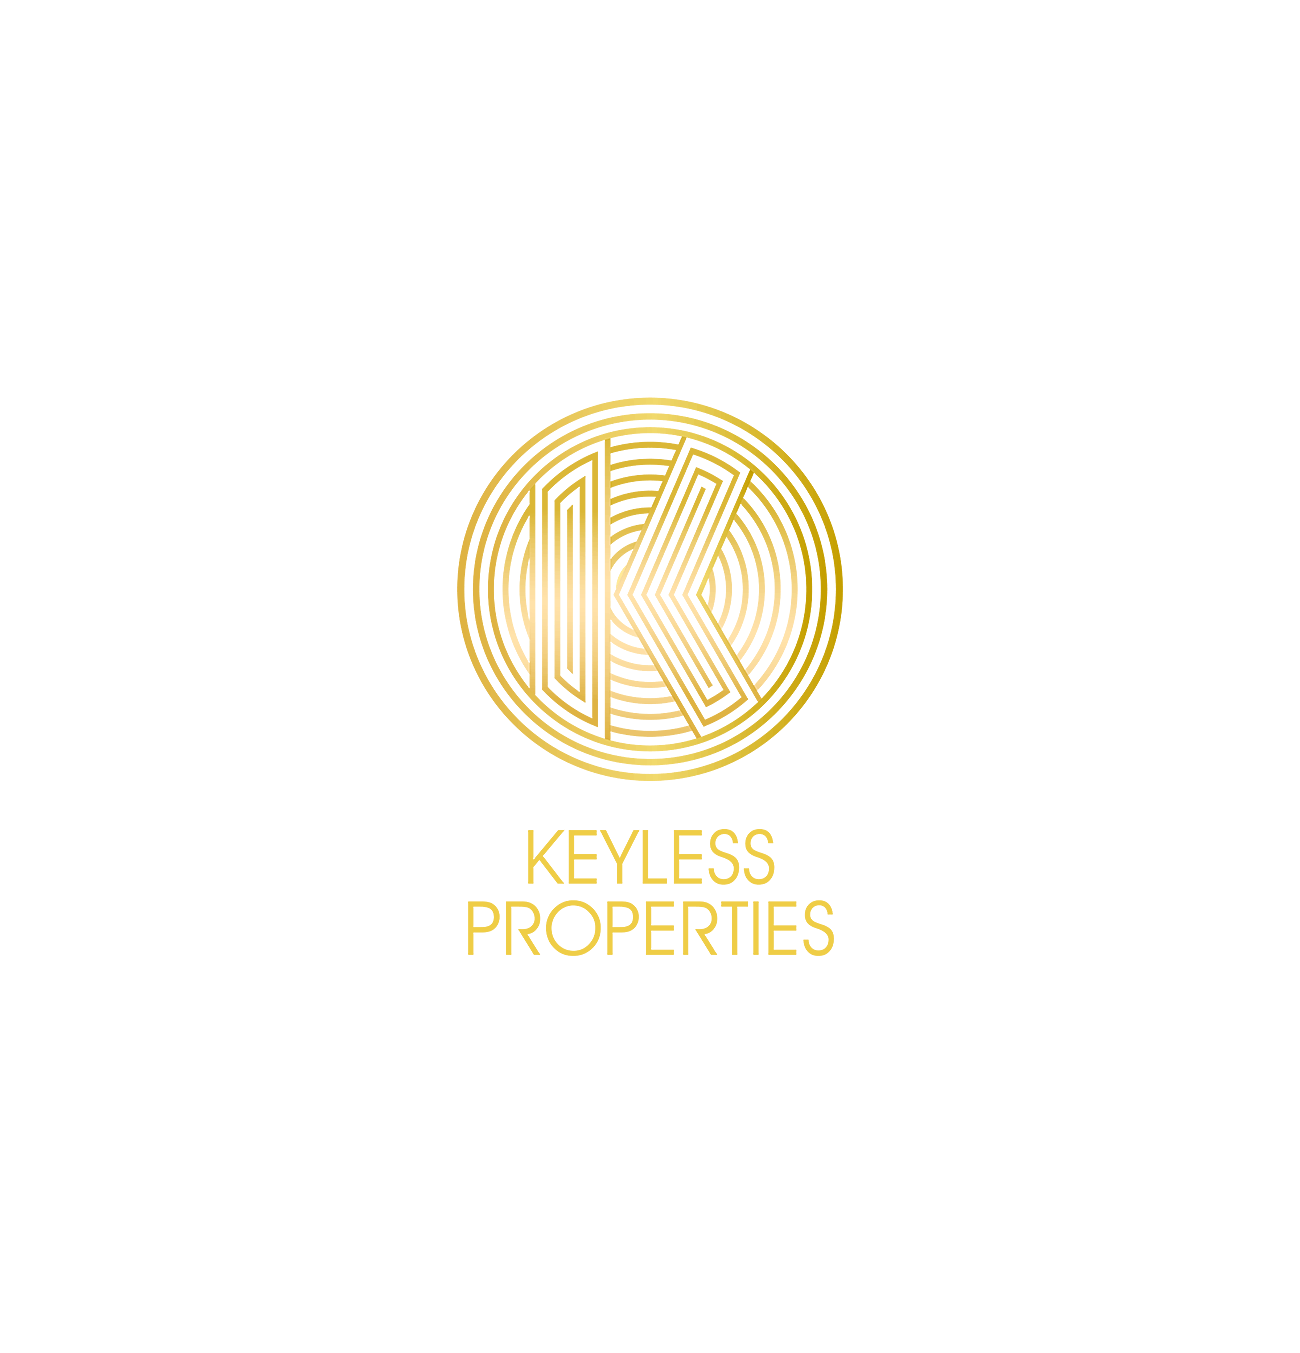 Keyless properties